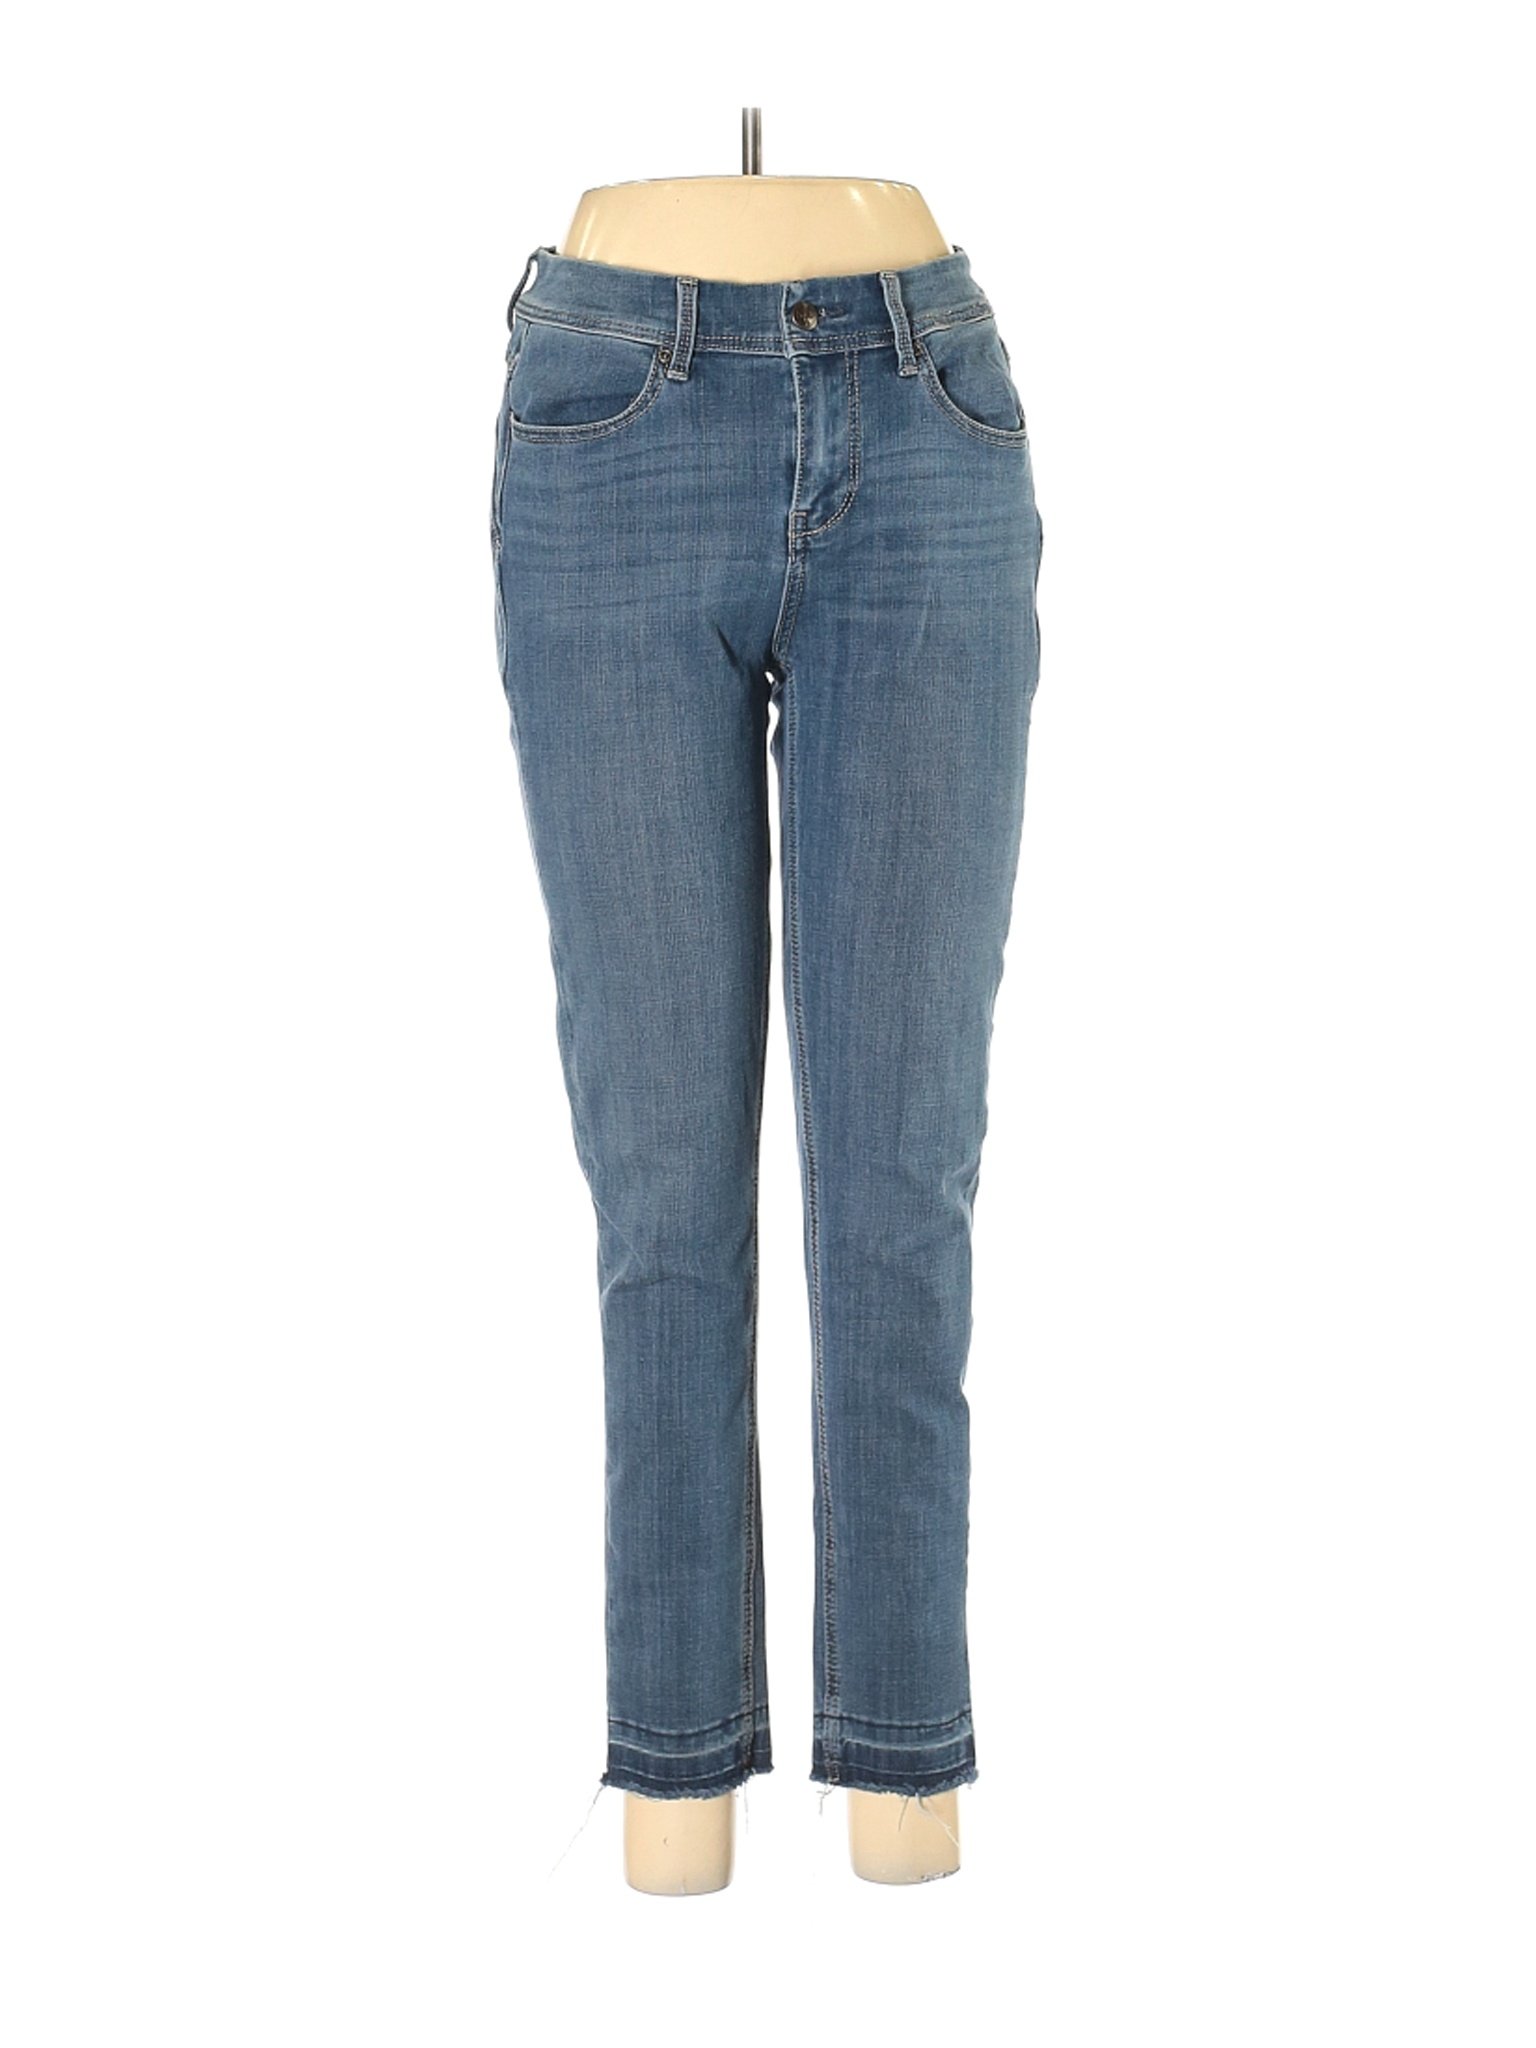 NYDJ Solid Blue Jeans Size 6 - 64% off | thredUP